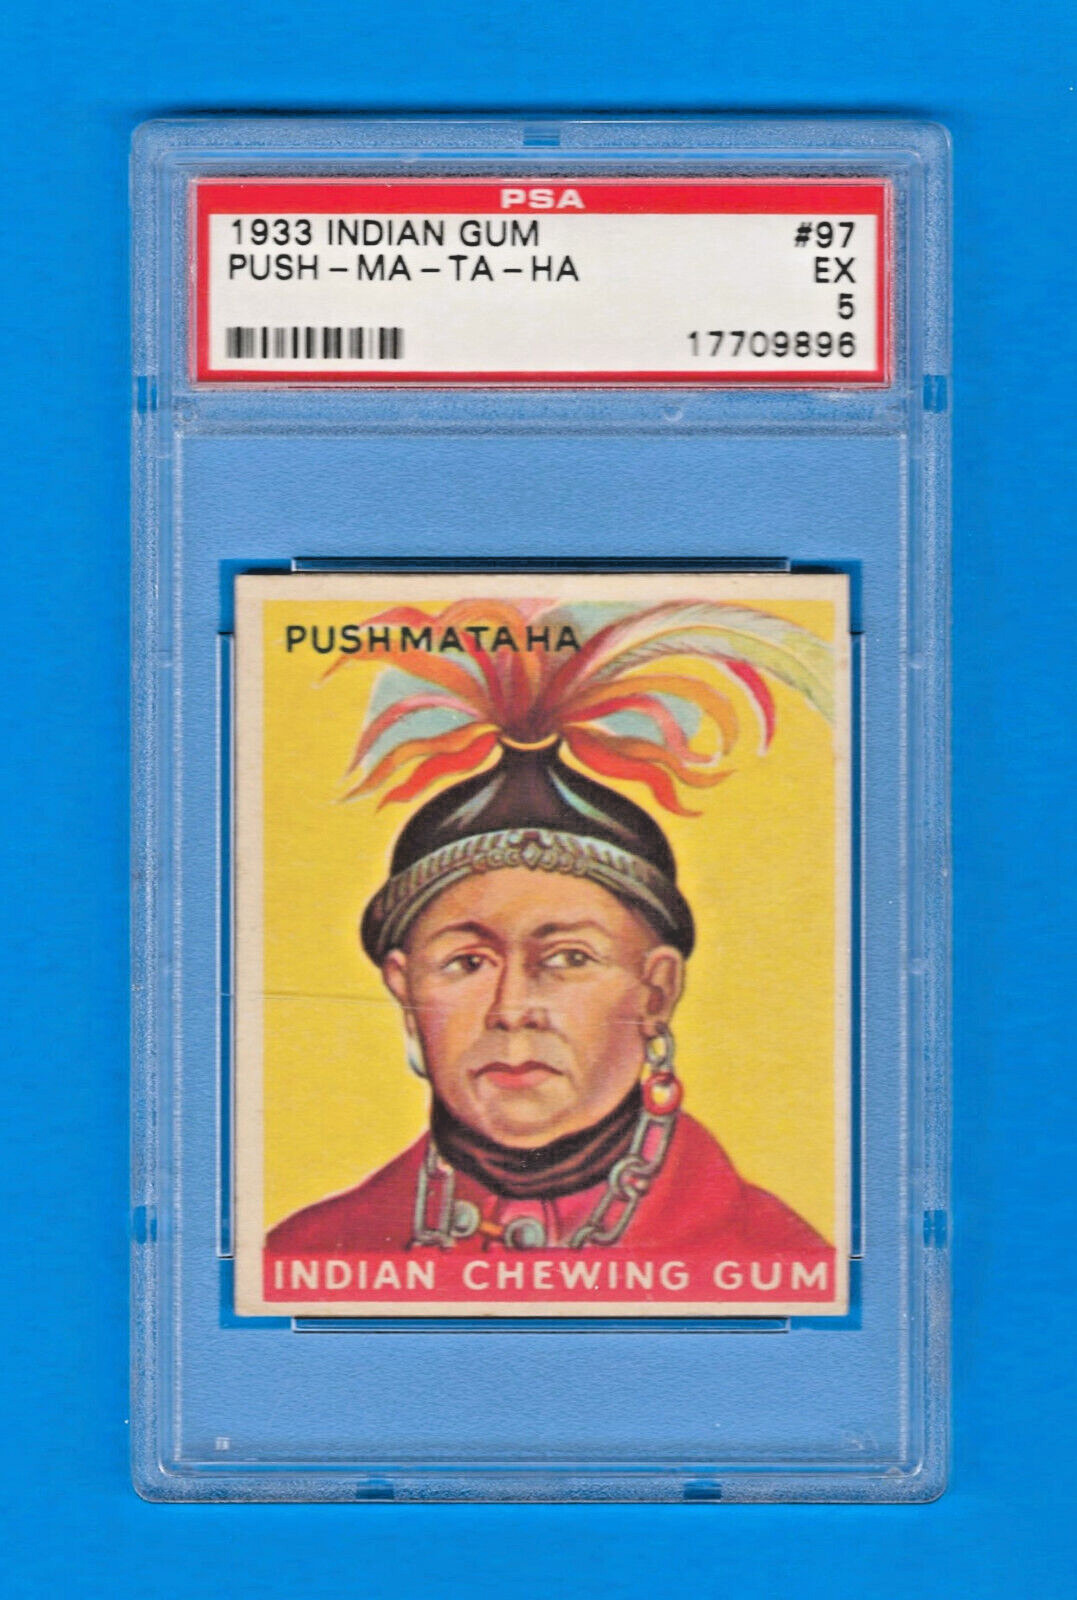 1933 R73 Goudey Indian Gum Card - #97 - PUSHMATAHA - Series of 192 - PSA 5 - EX